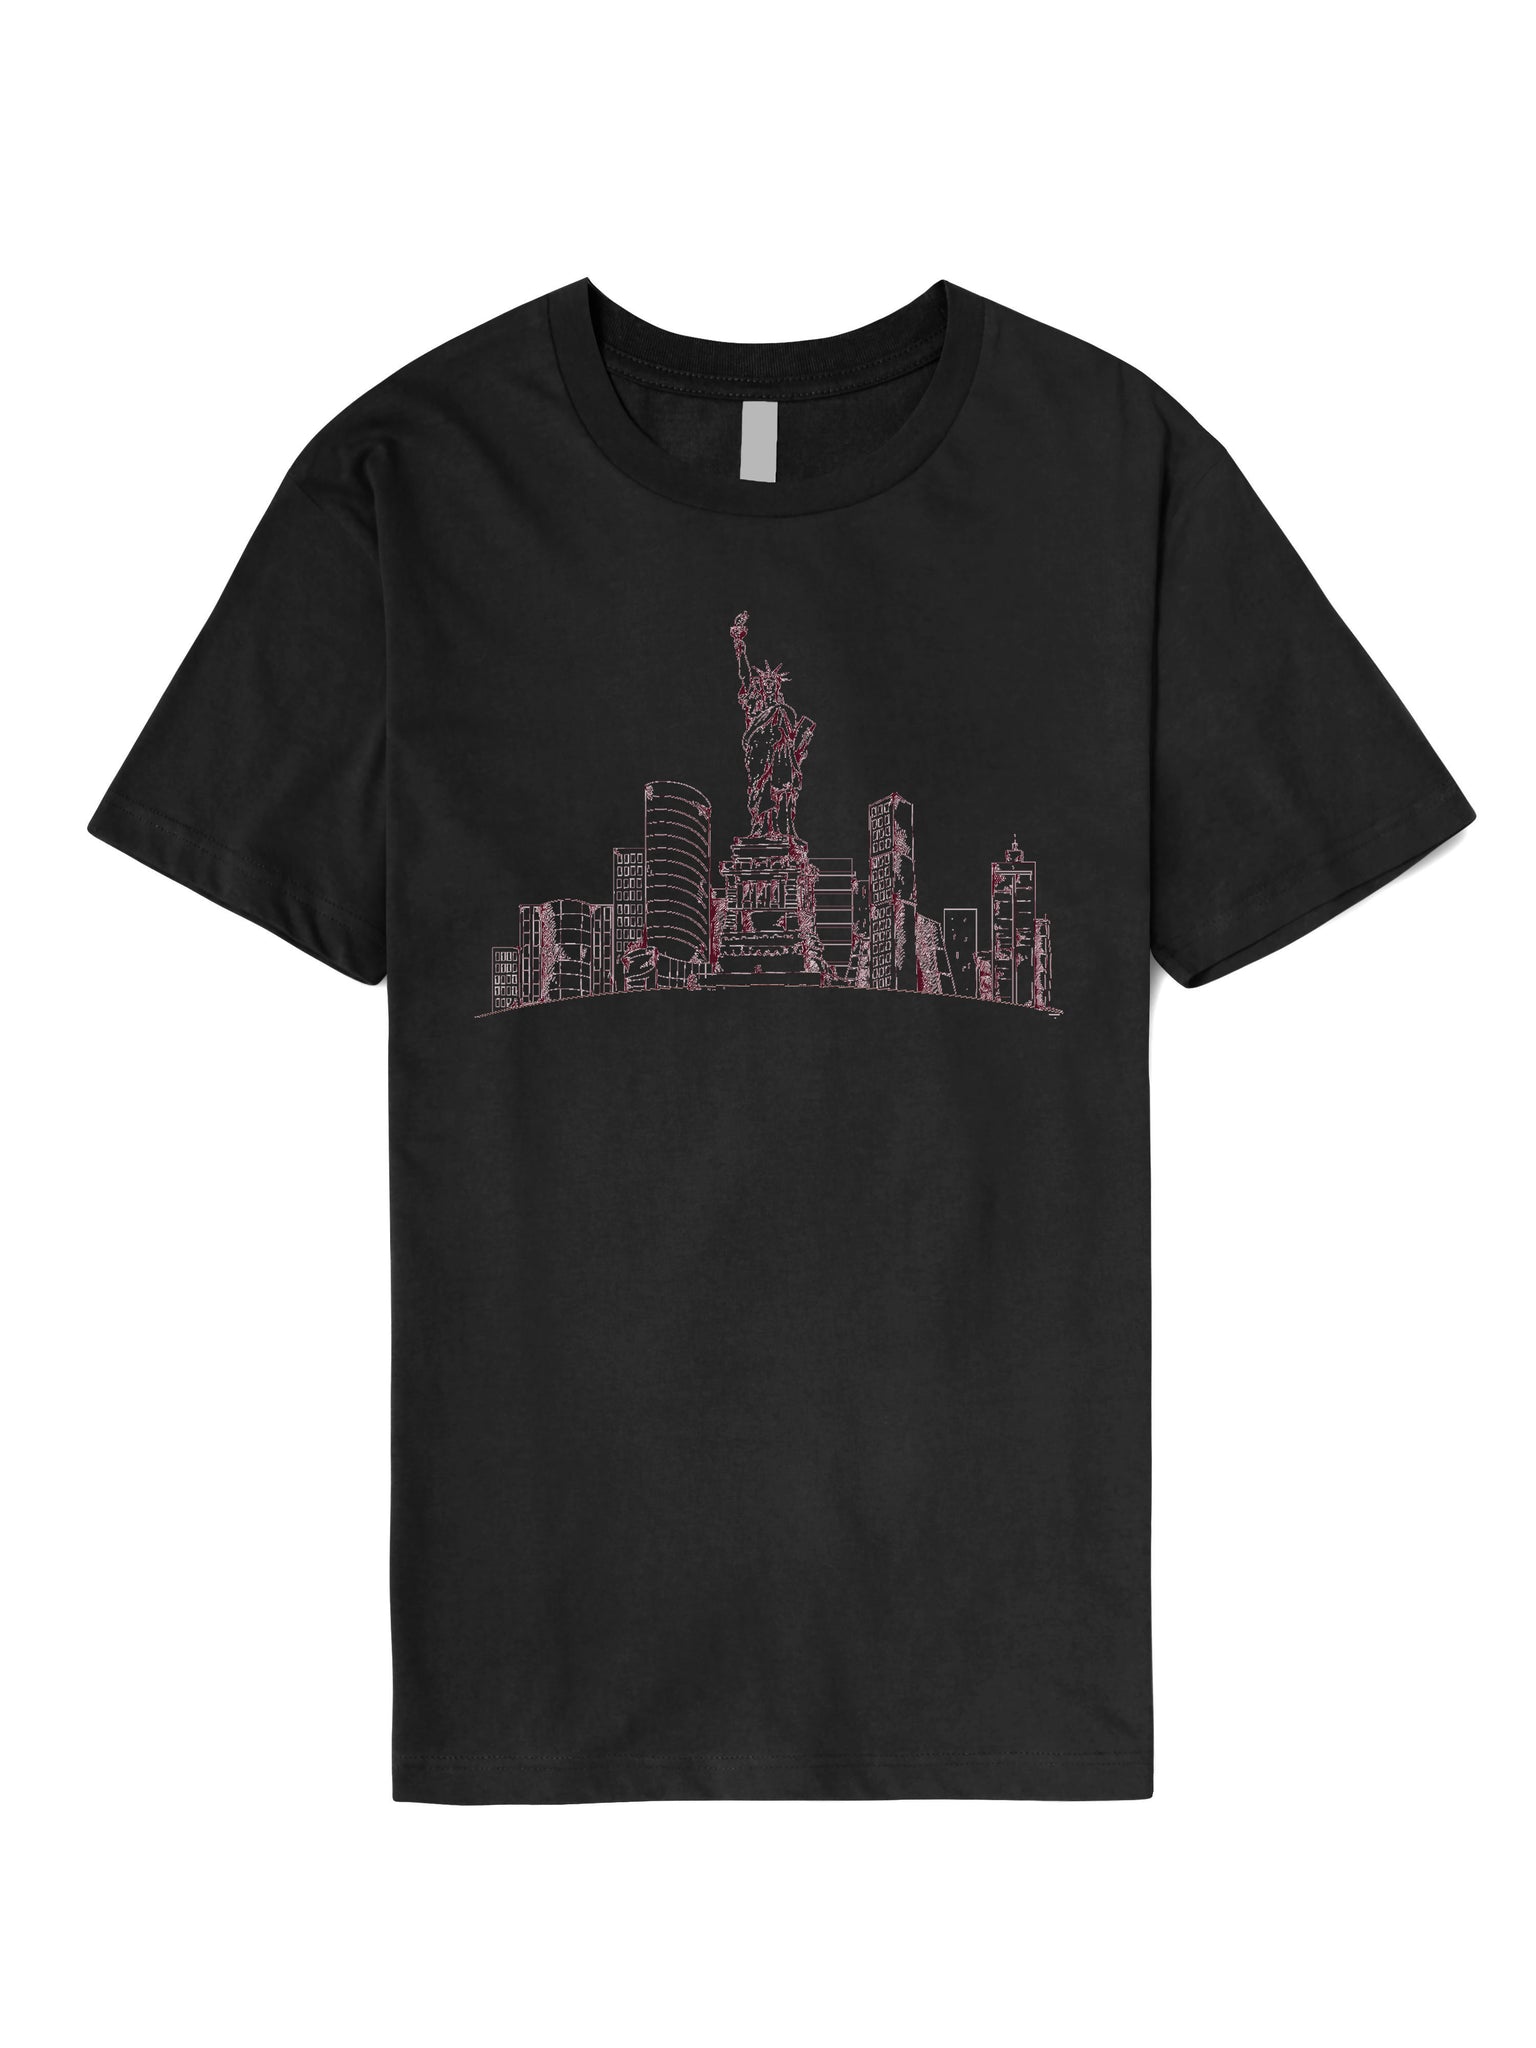 Skyline and Graphic Shirt York & - New City Hat T-Shirt T Tank Tops Beyond |